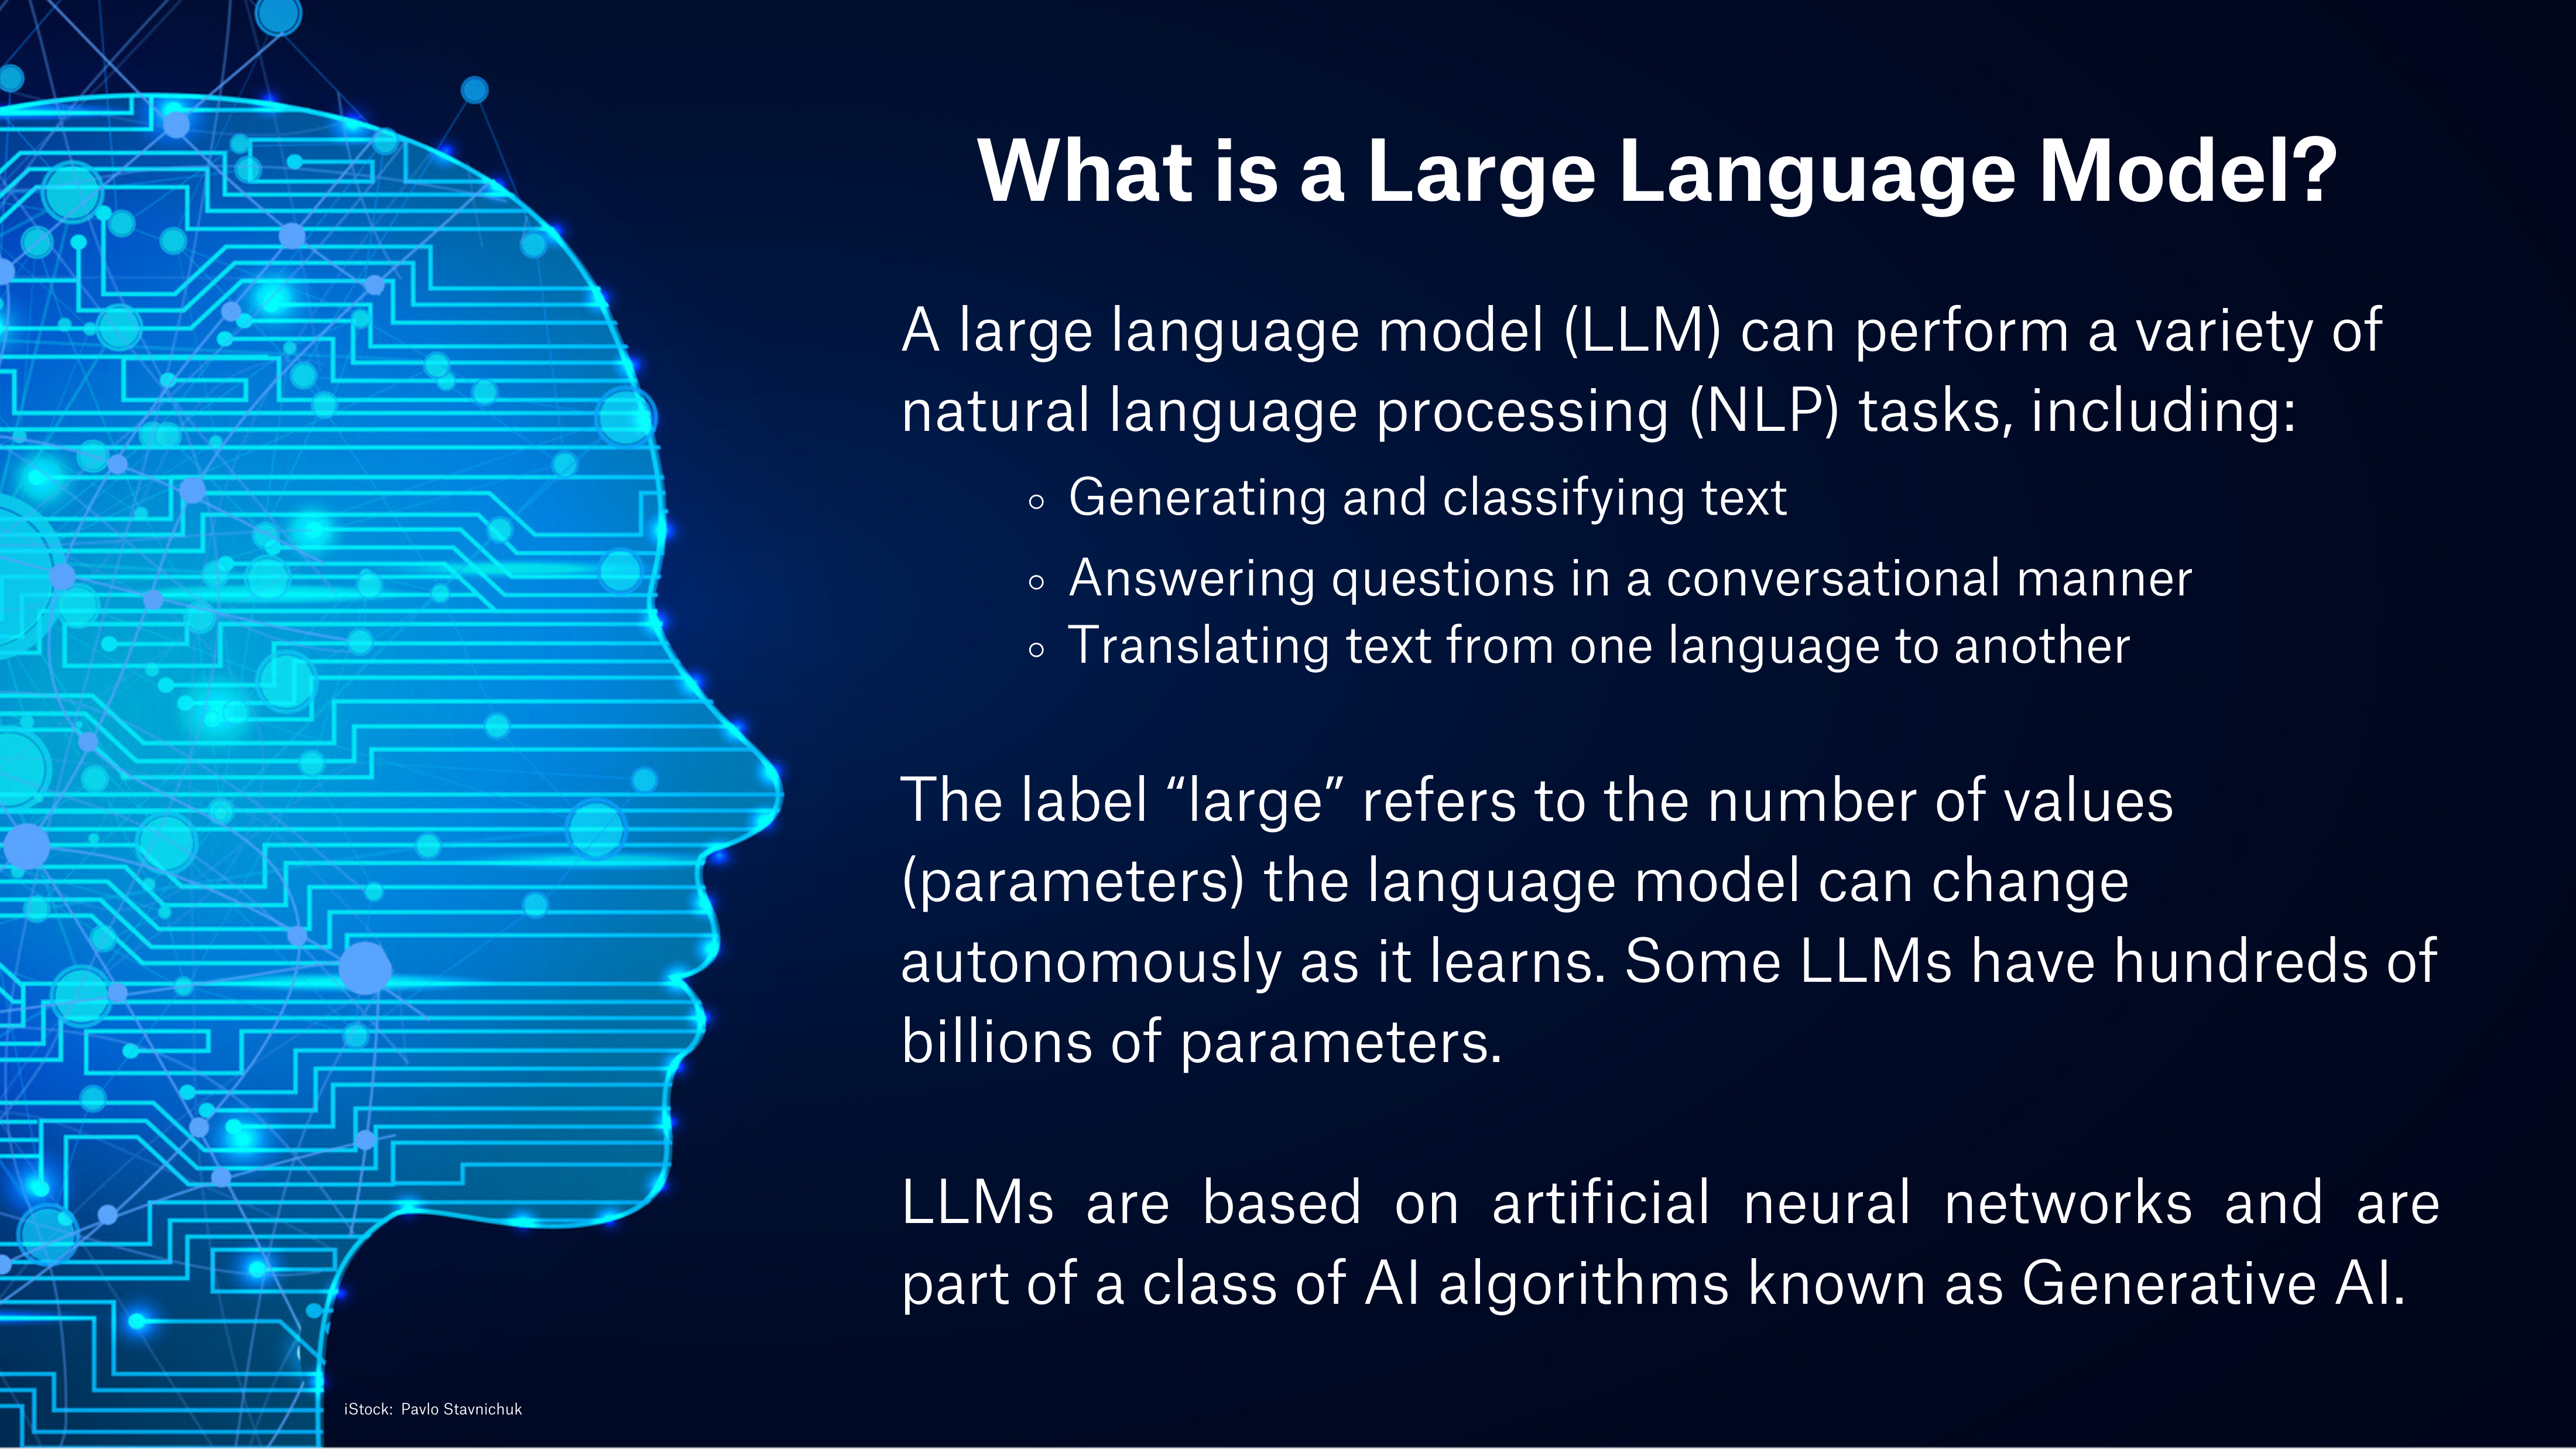 Graphic image explaining what a Large Language Model is